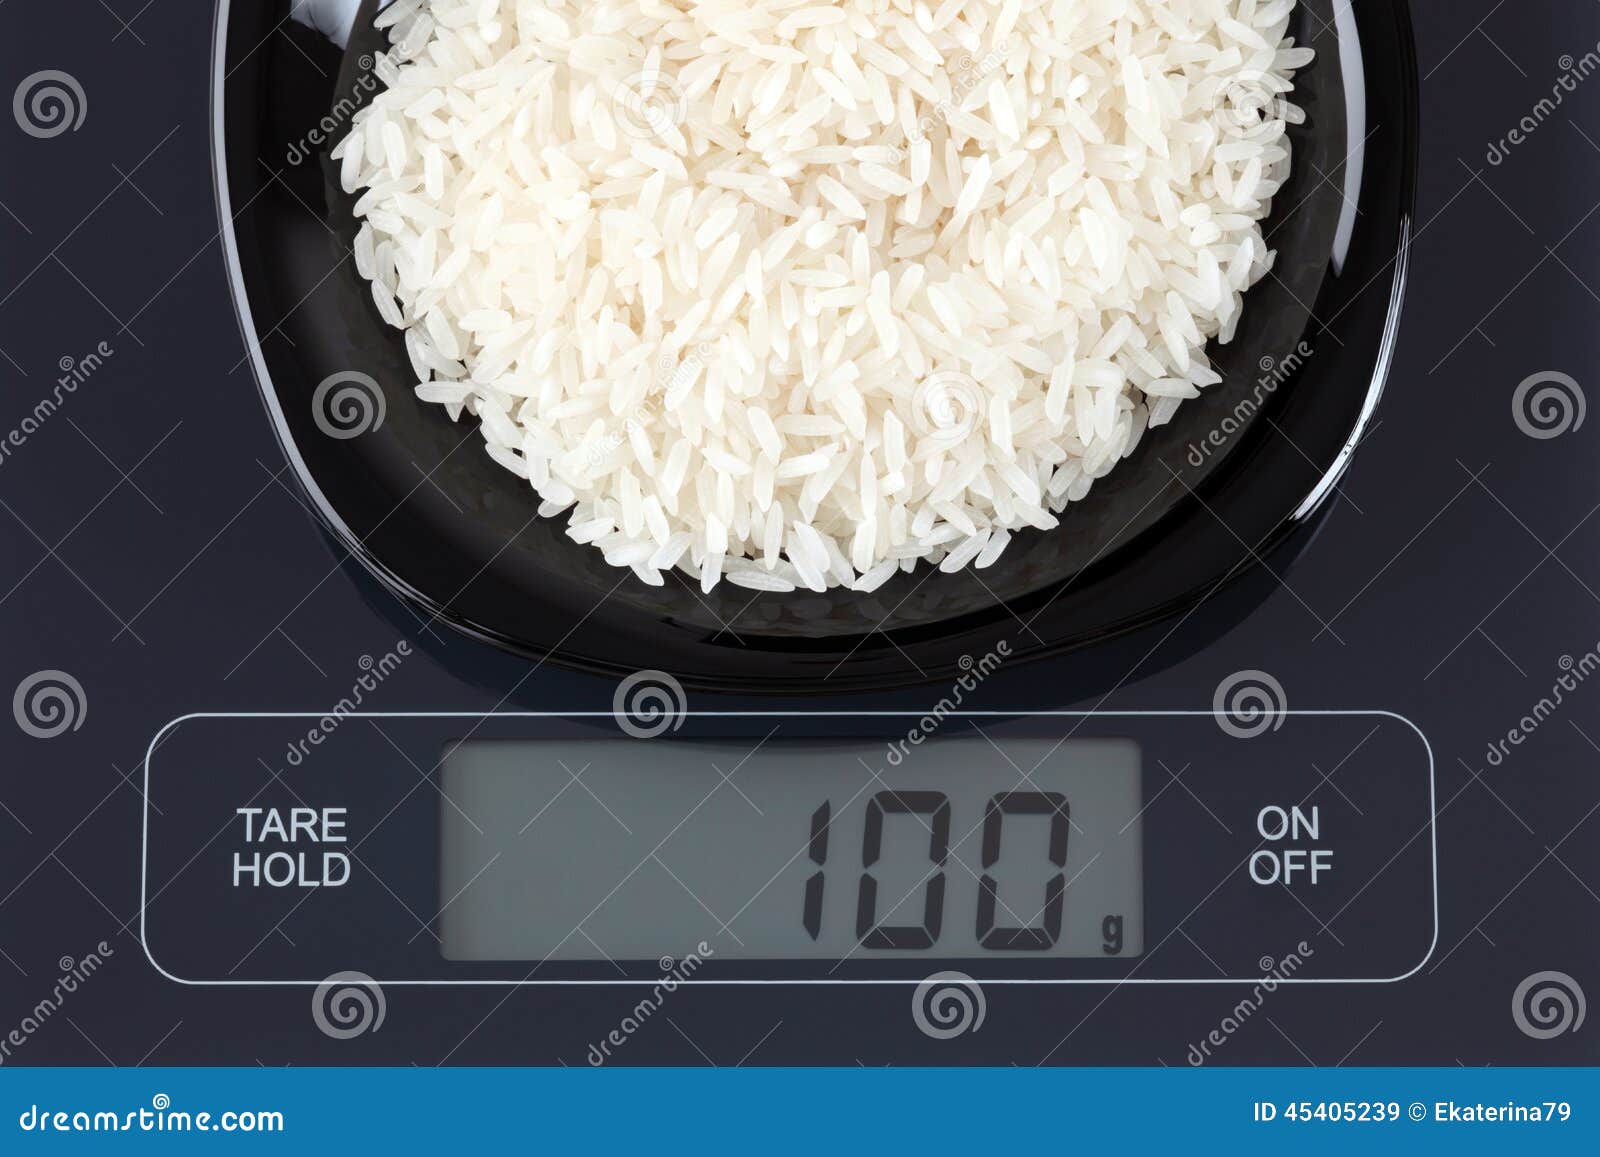 Порция вареного риса сколько грамм. 100 Грамм риса. 100 Грамм риса на тарелке. 100 Грамм отварного риск. 100 Грамм варного Рисп.